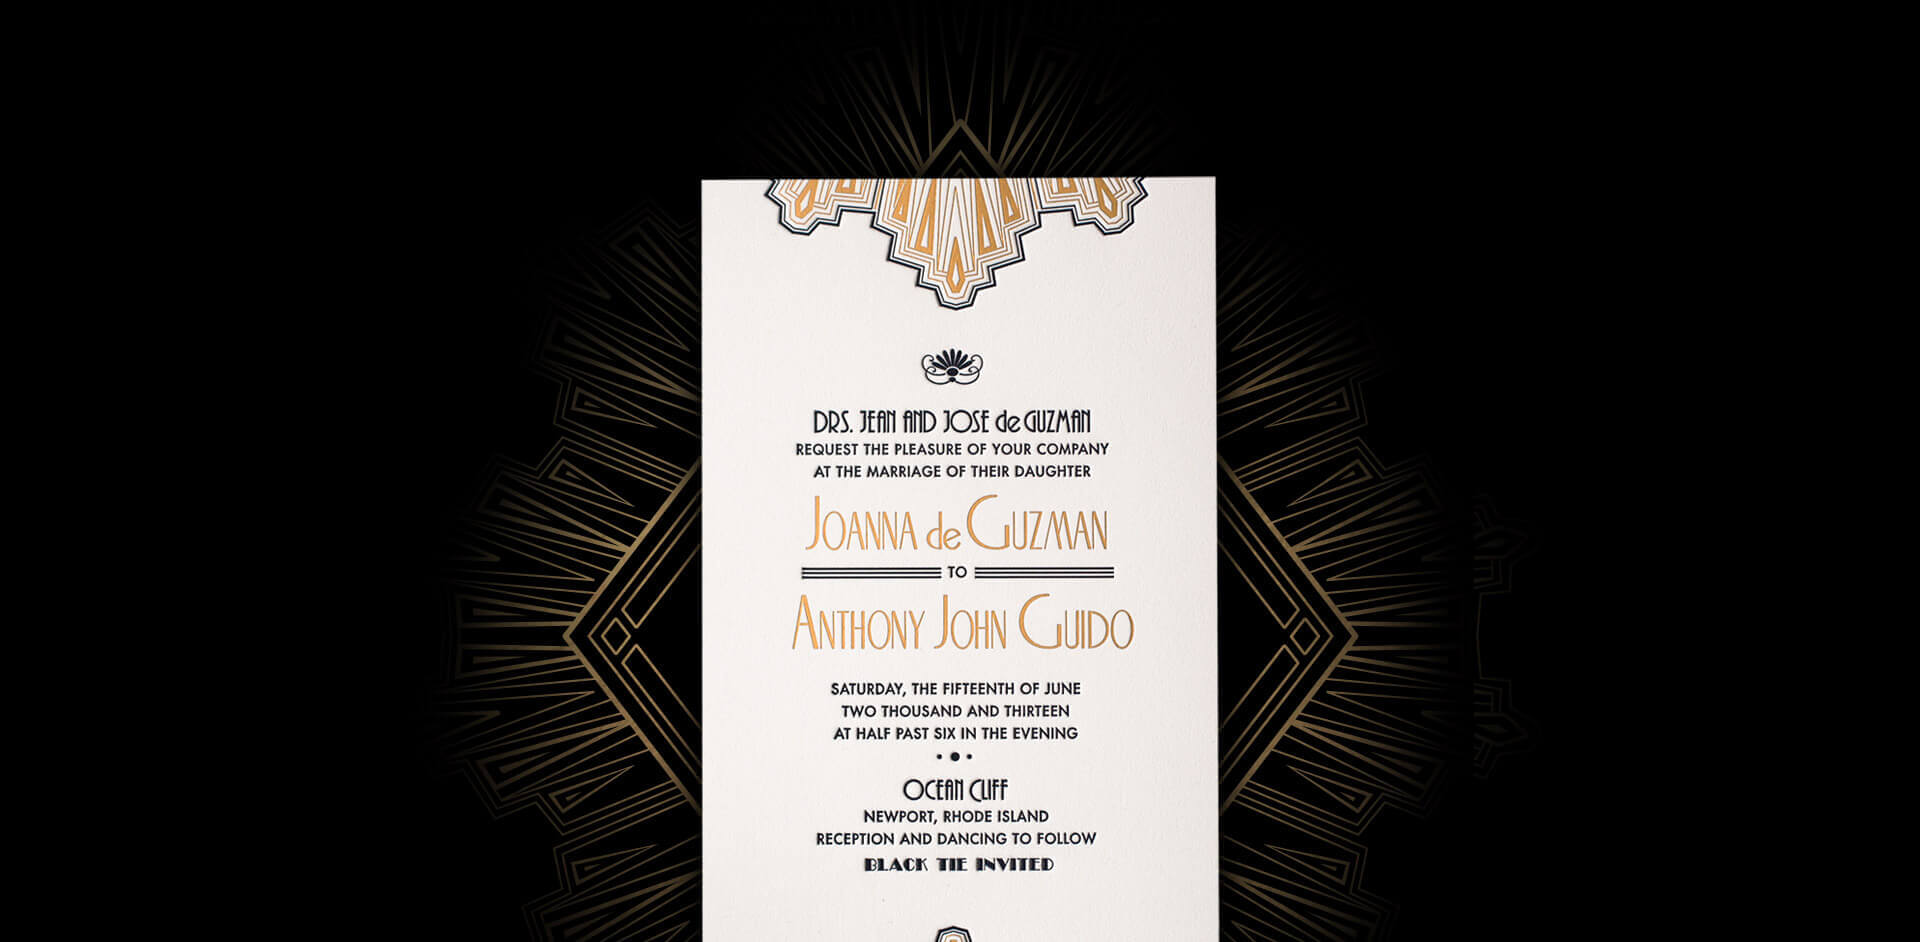 Art Deco gold and black wedding invitation card